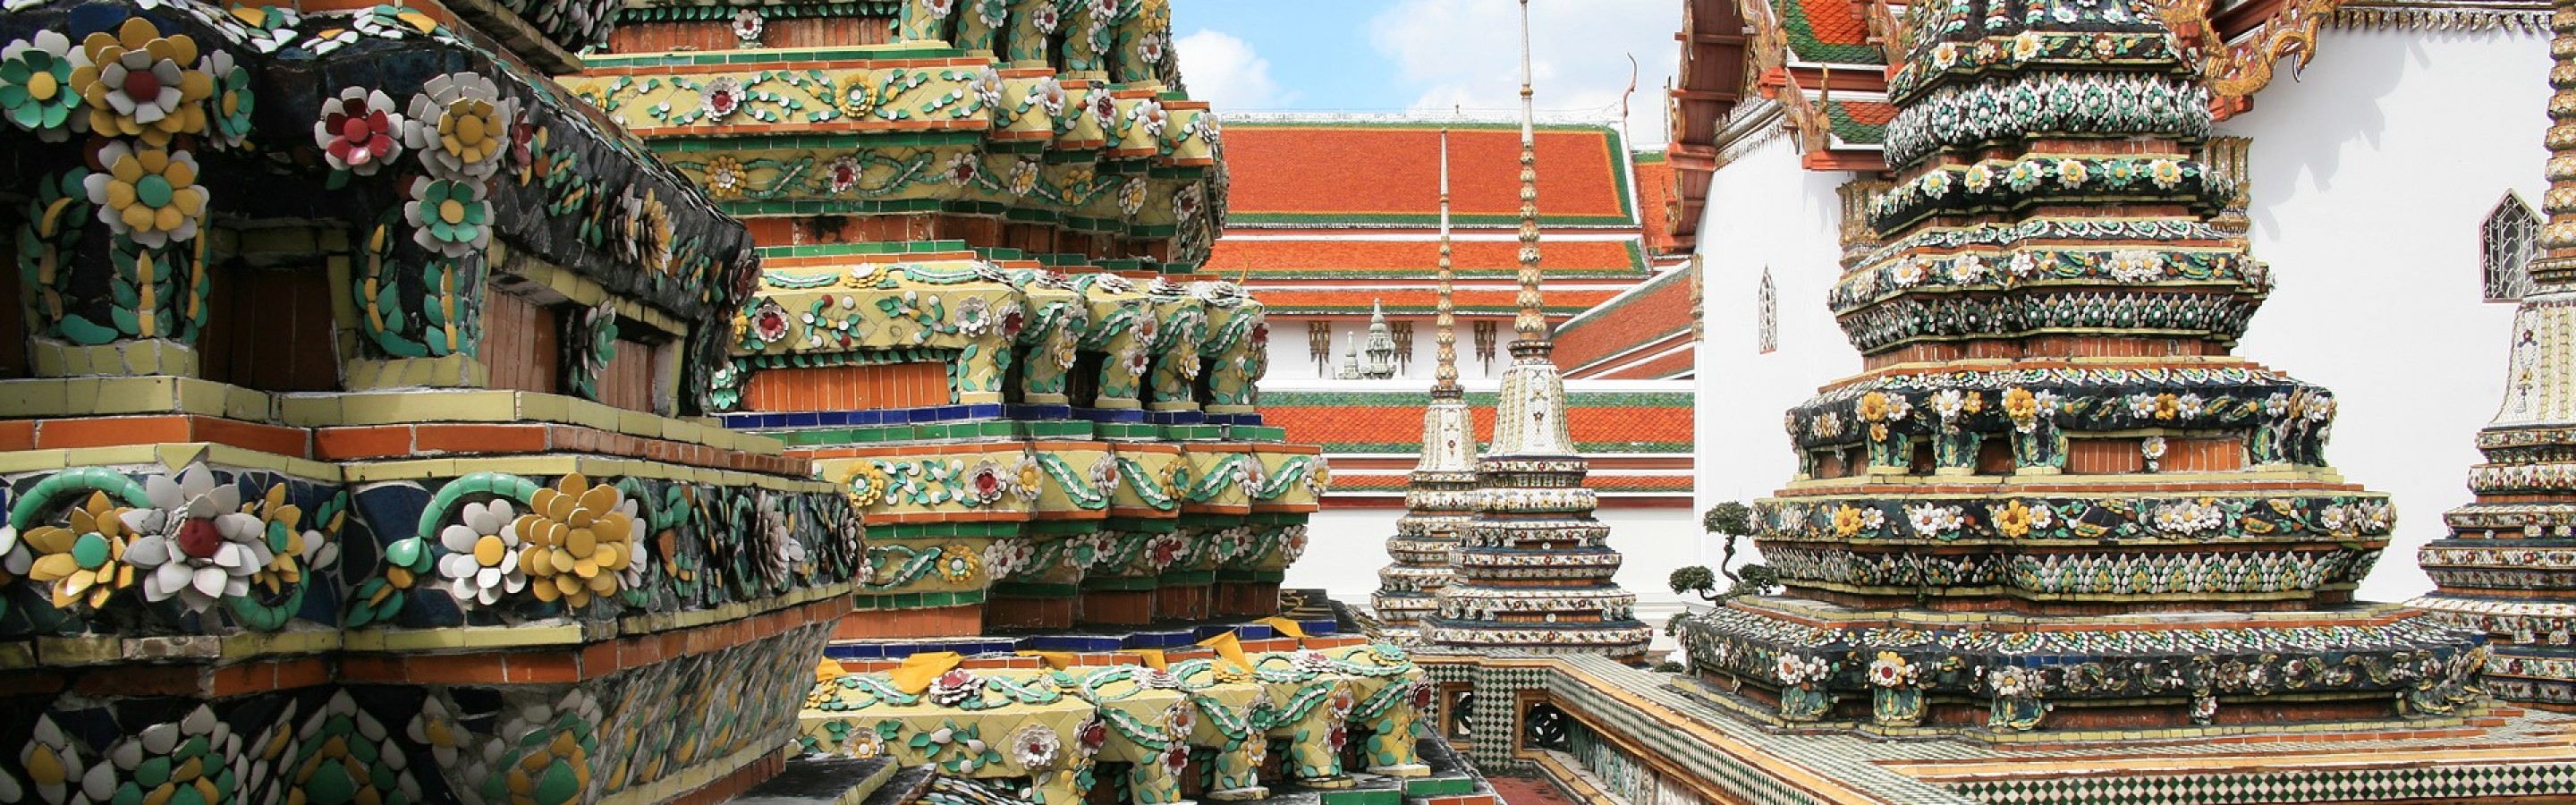 bangkok temple 2880x900